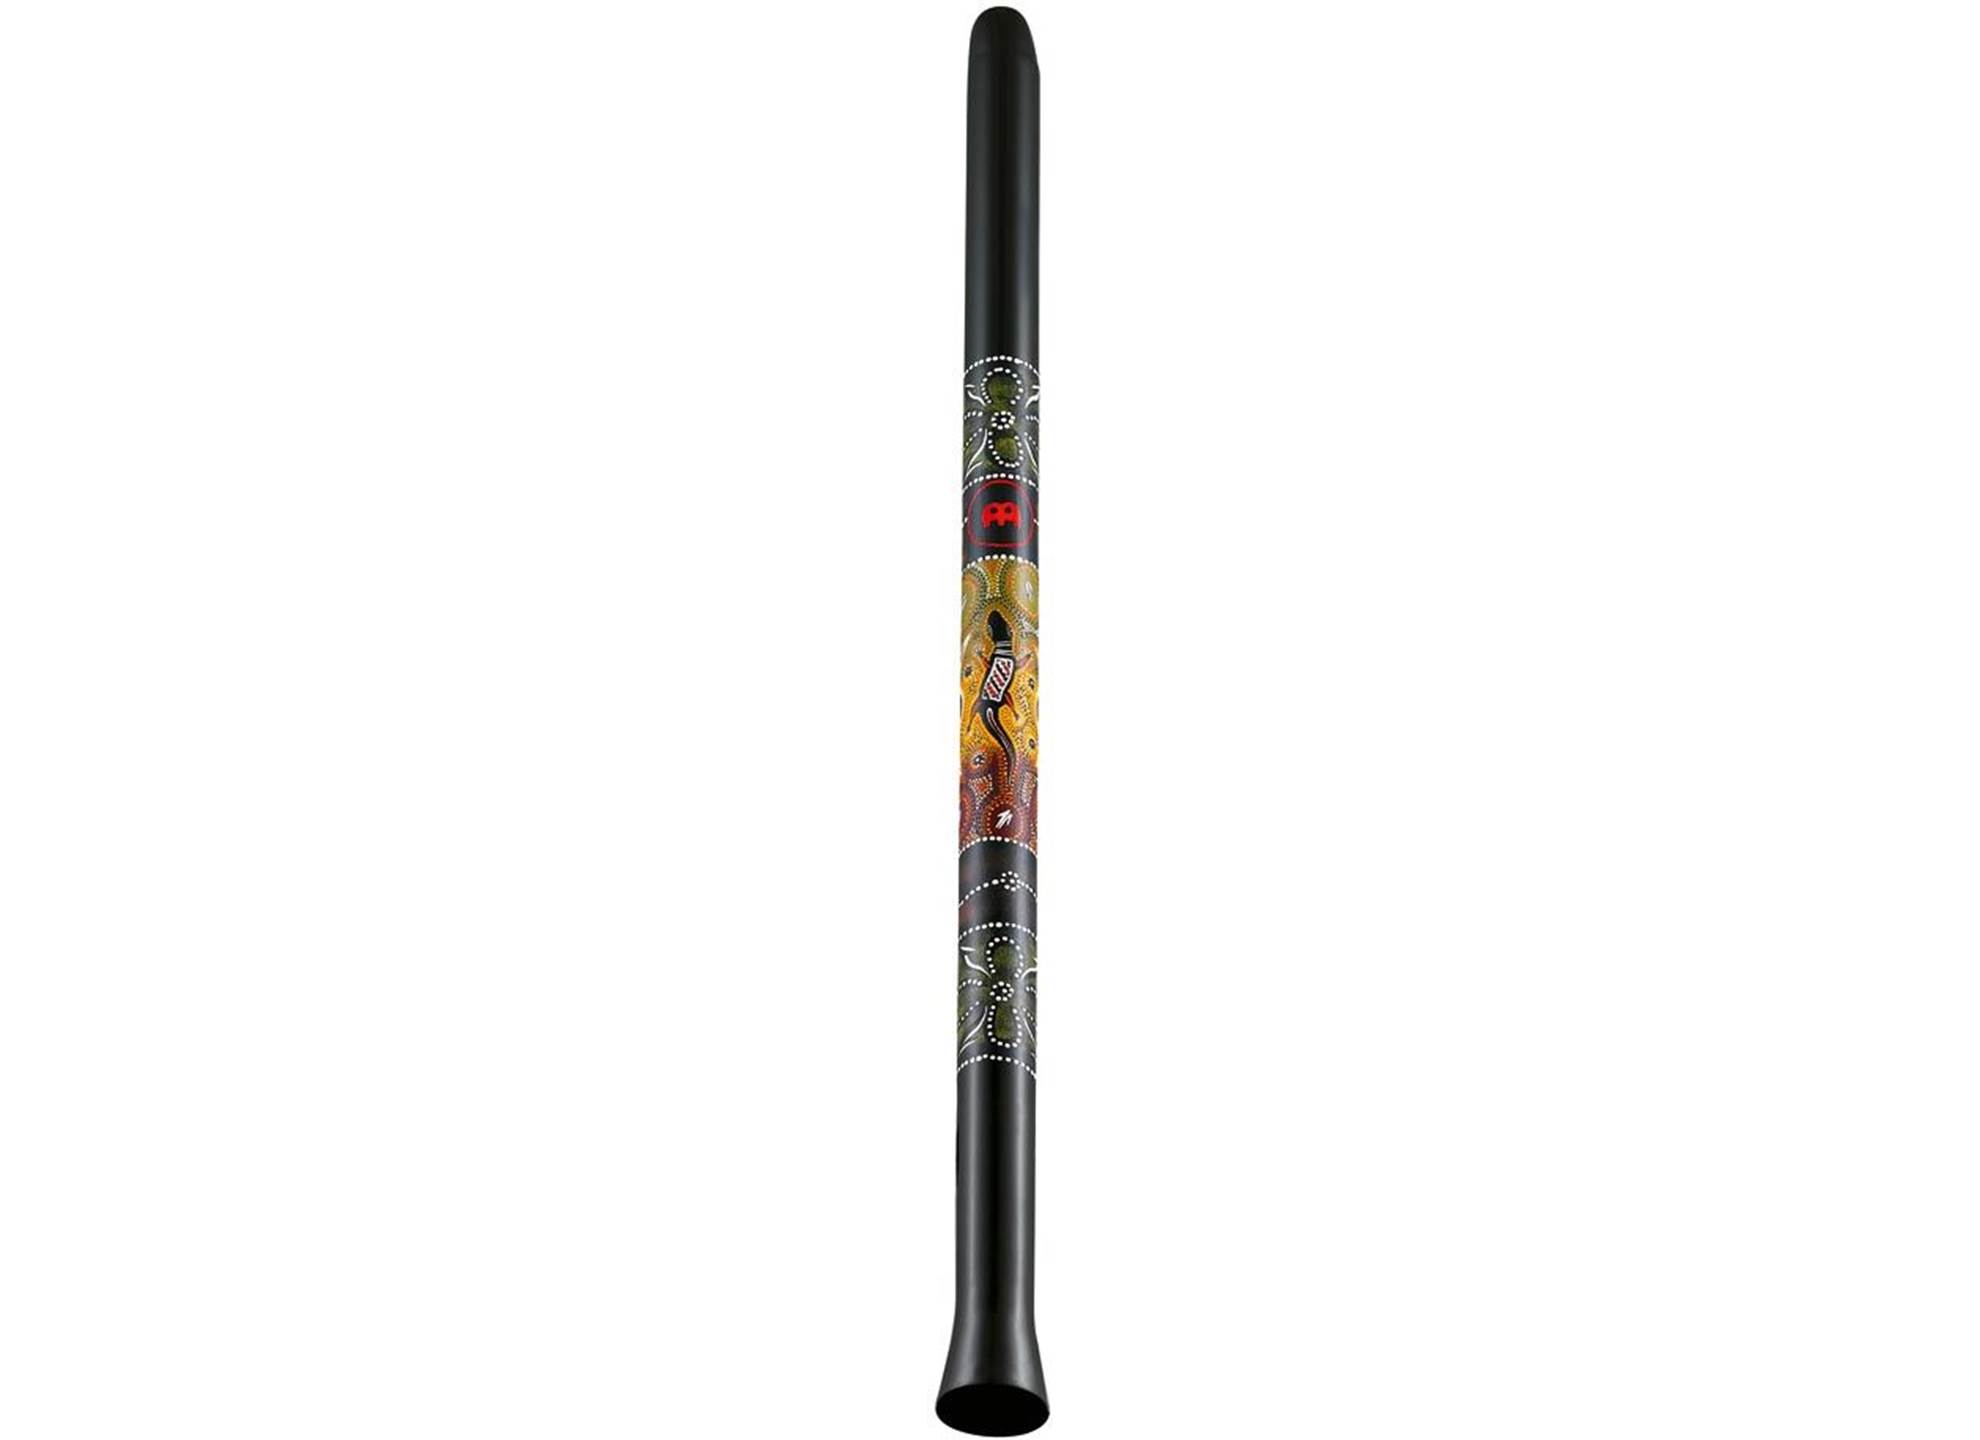 SDDG1-BK Synthetic Didgeridoo Black